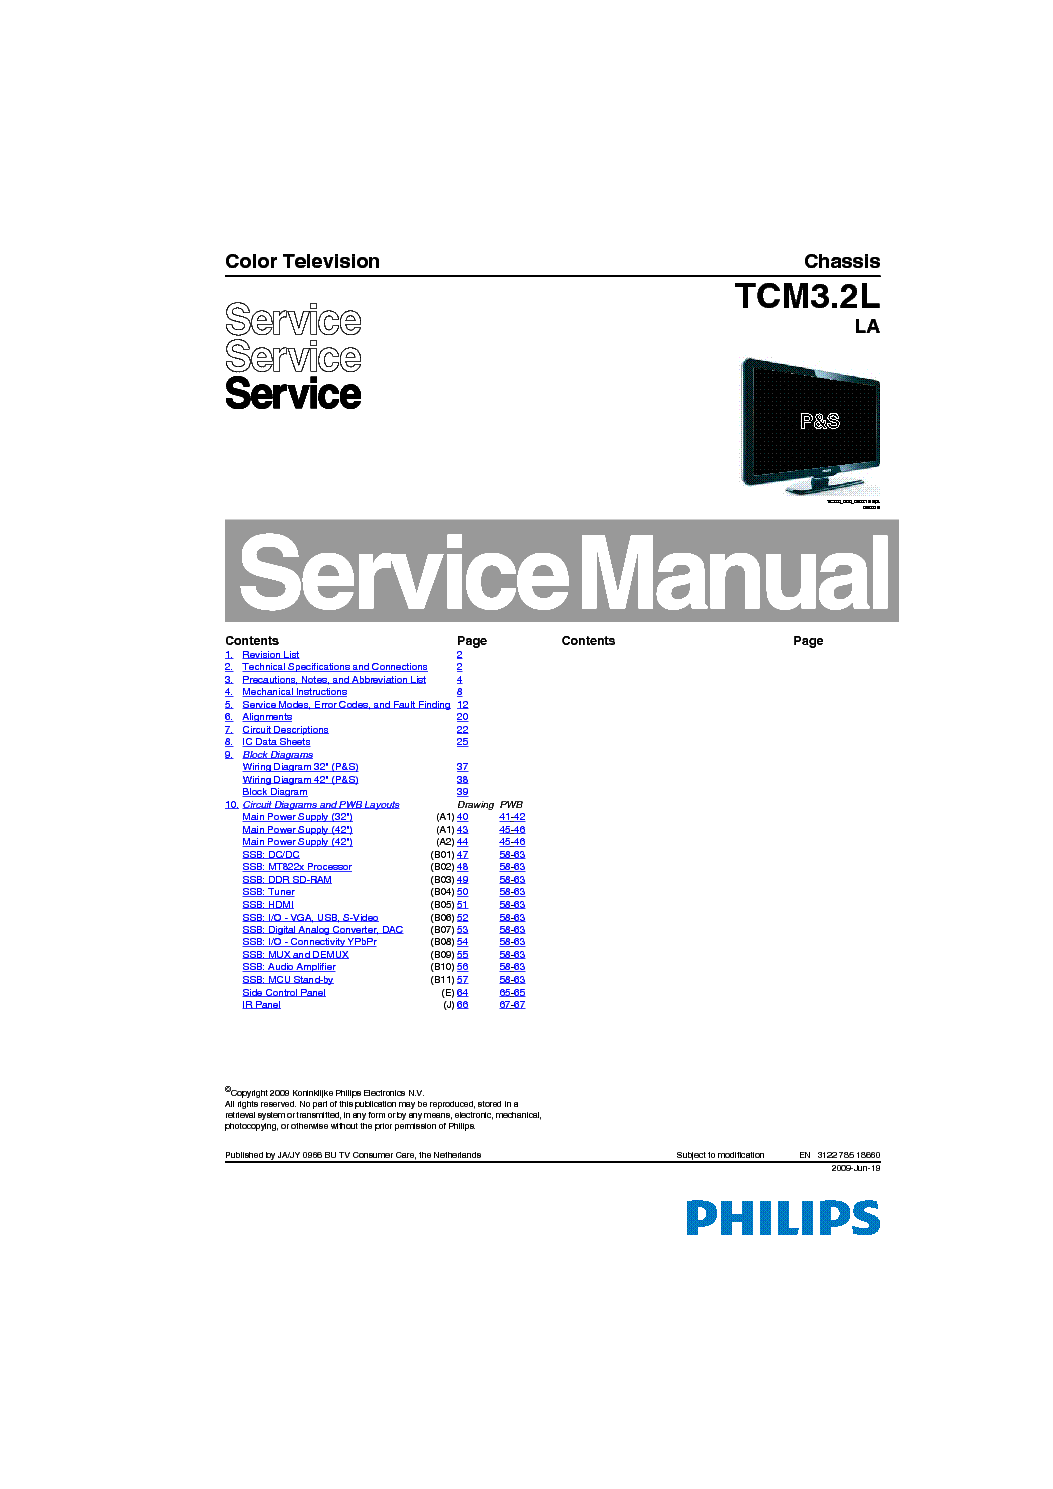 PHILIPS CHASSIS TCM3.2L-LA SM service manual (1st page)